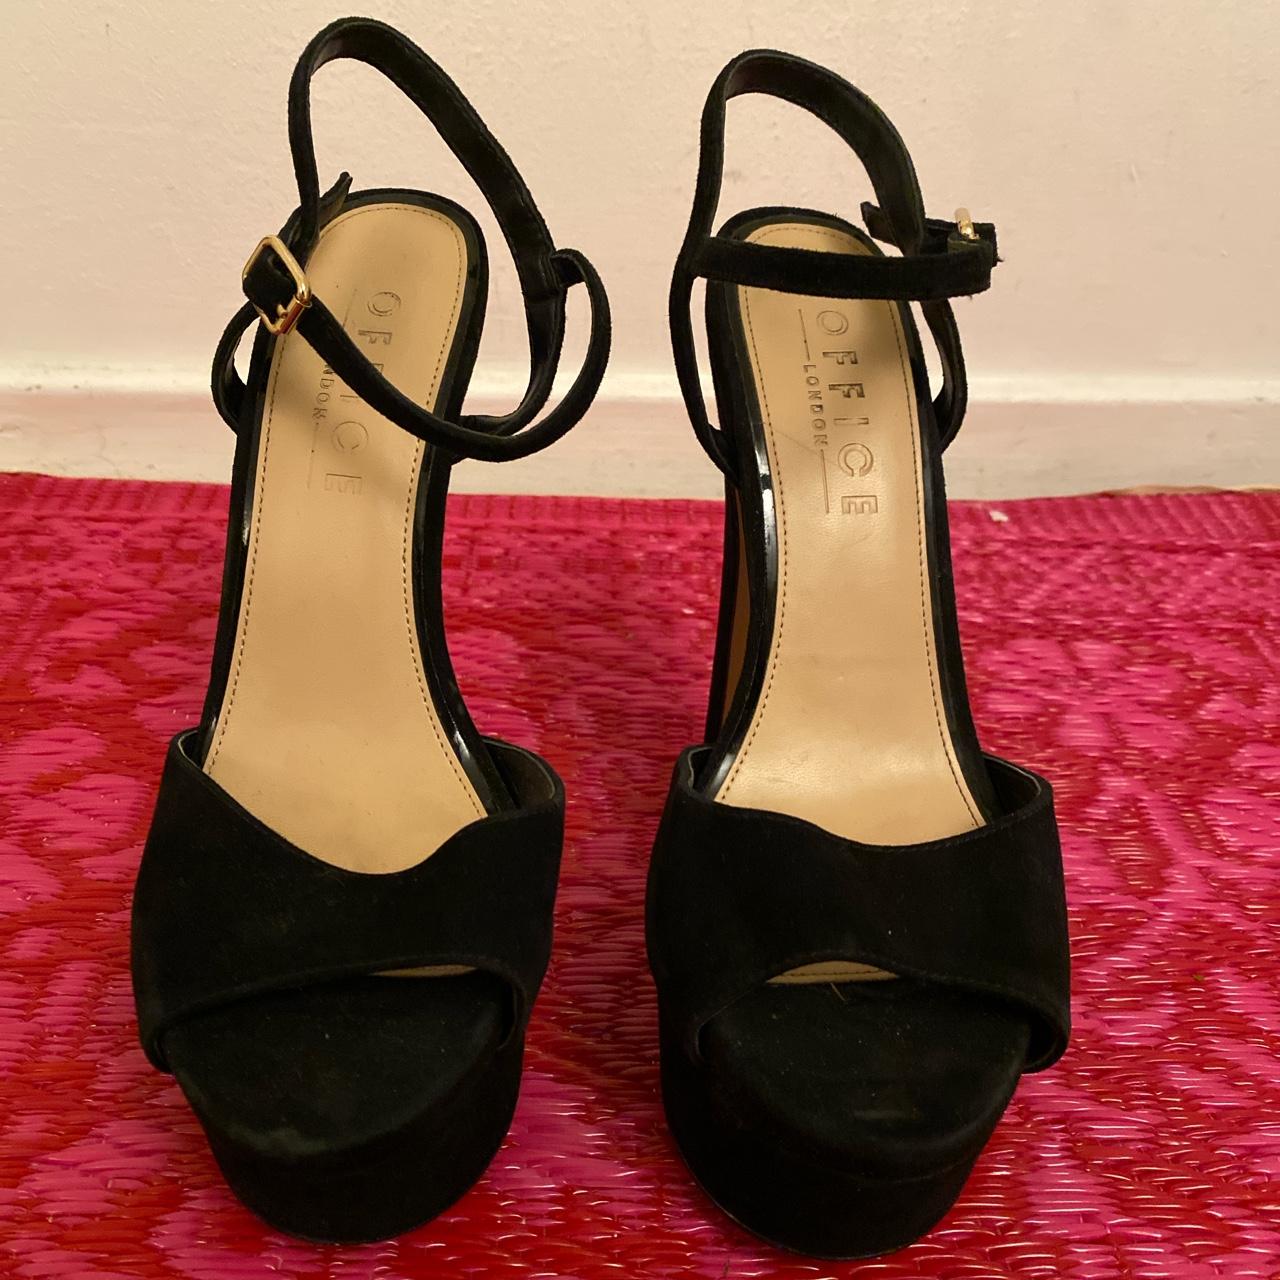 EUC Giani Bernini Black High Heels size 7M. These - Depop